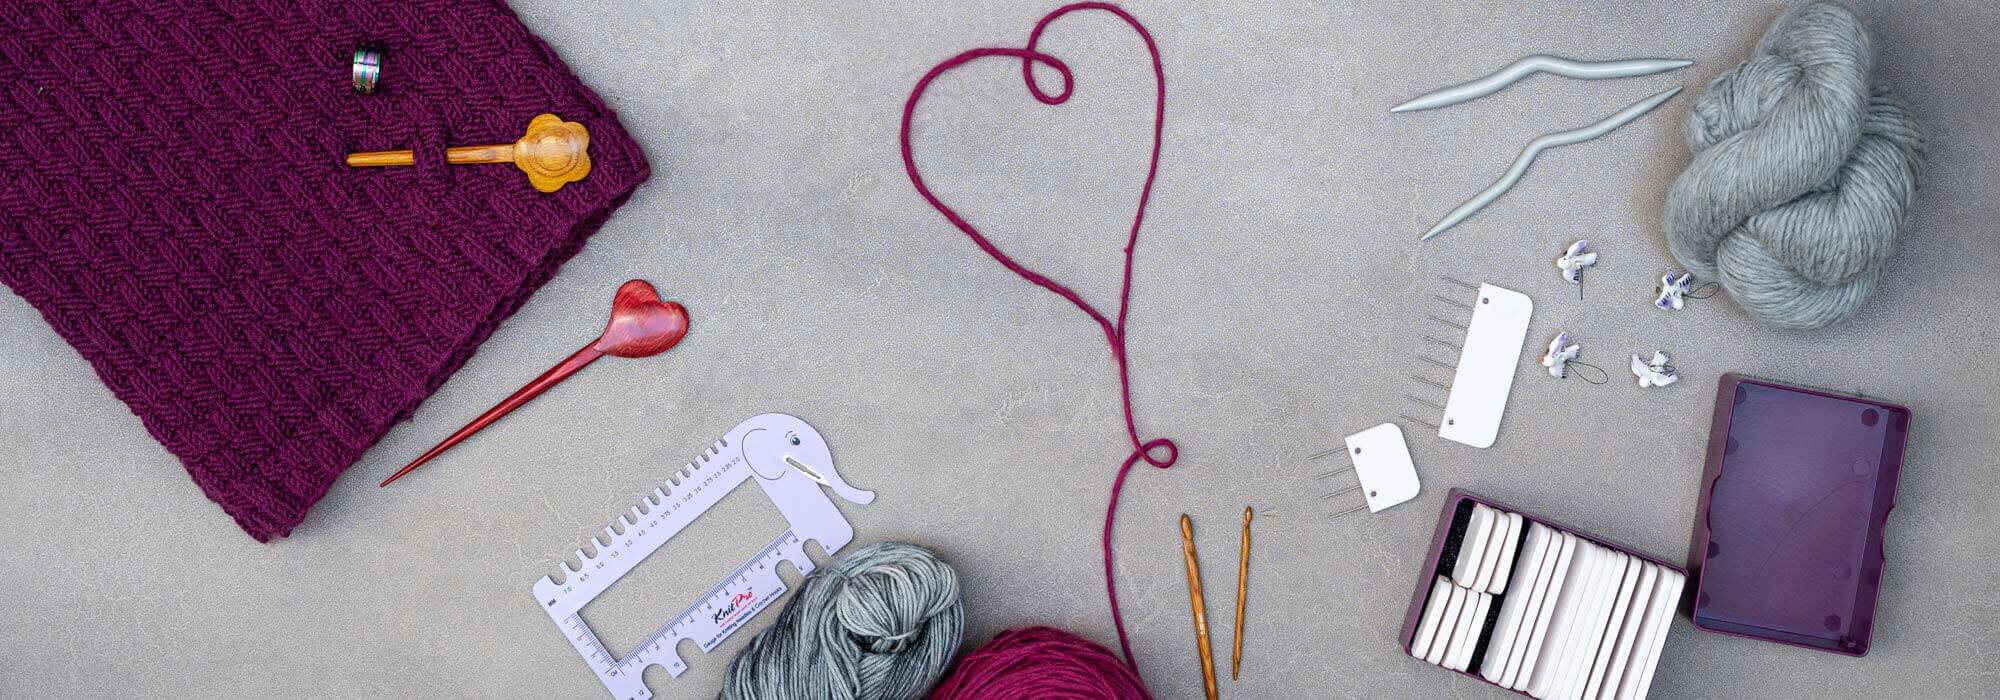 Knitting Accessories | Crochet Accessories | KnitPro